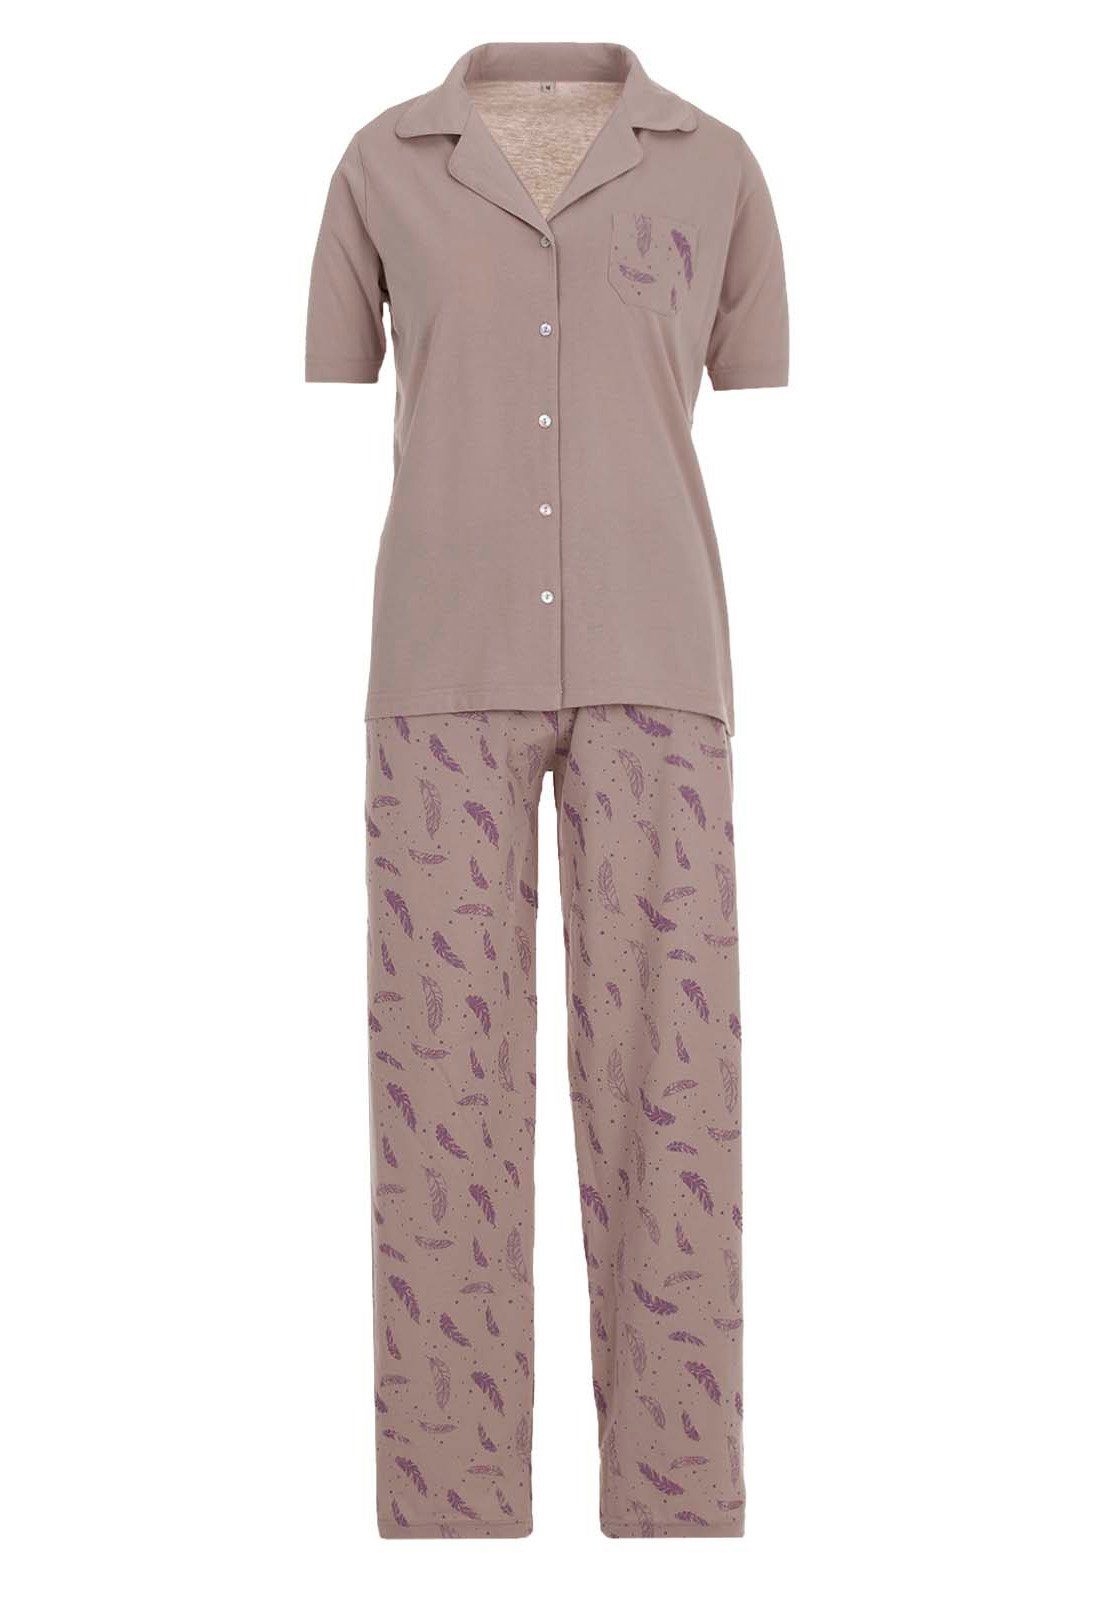 zeitlos Schlafanzug Pyjama Set Kurzarm - Feder sand